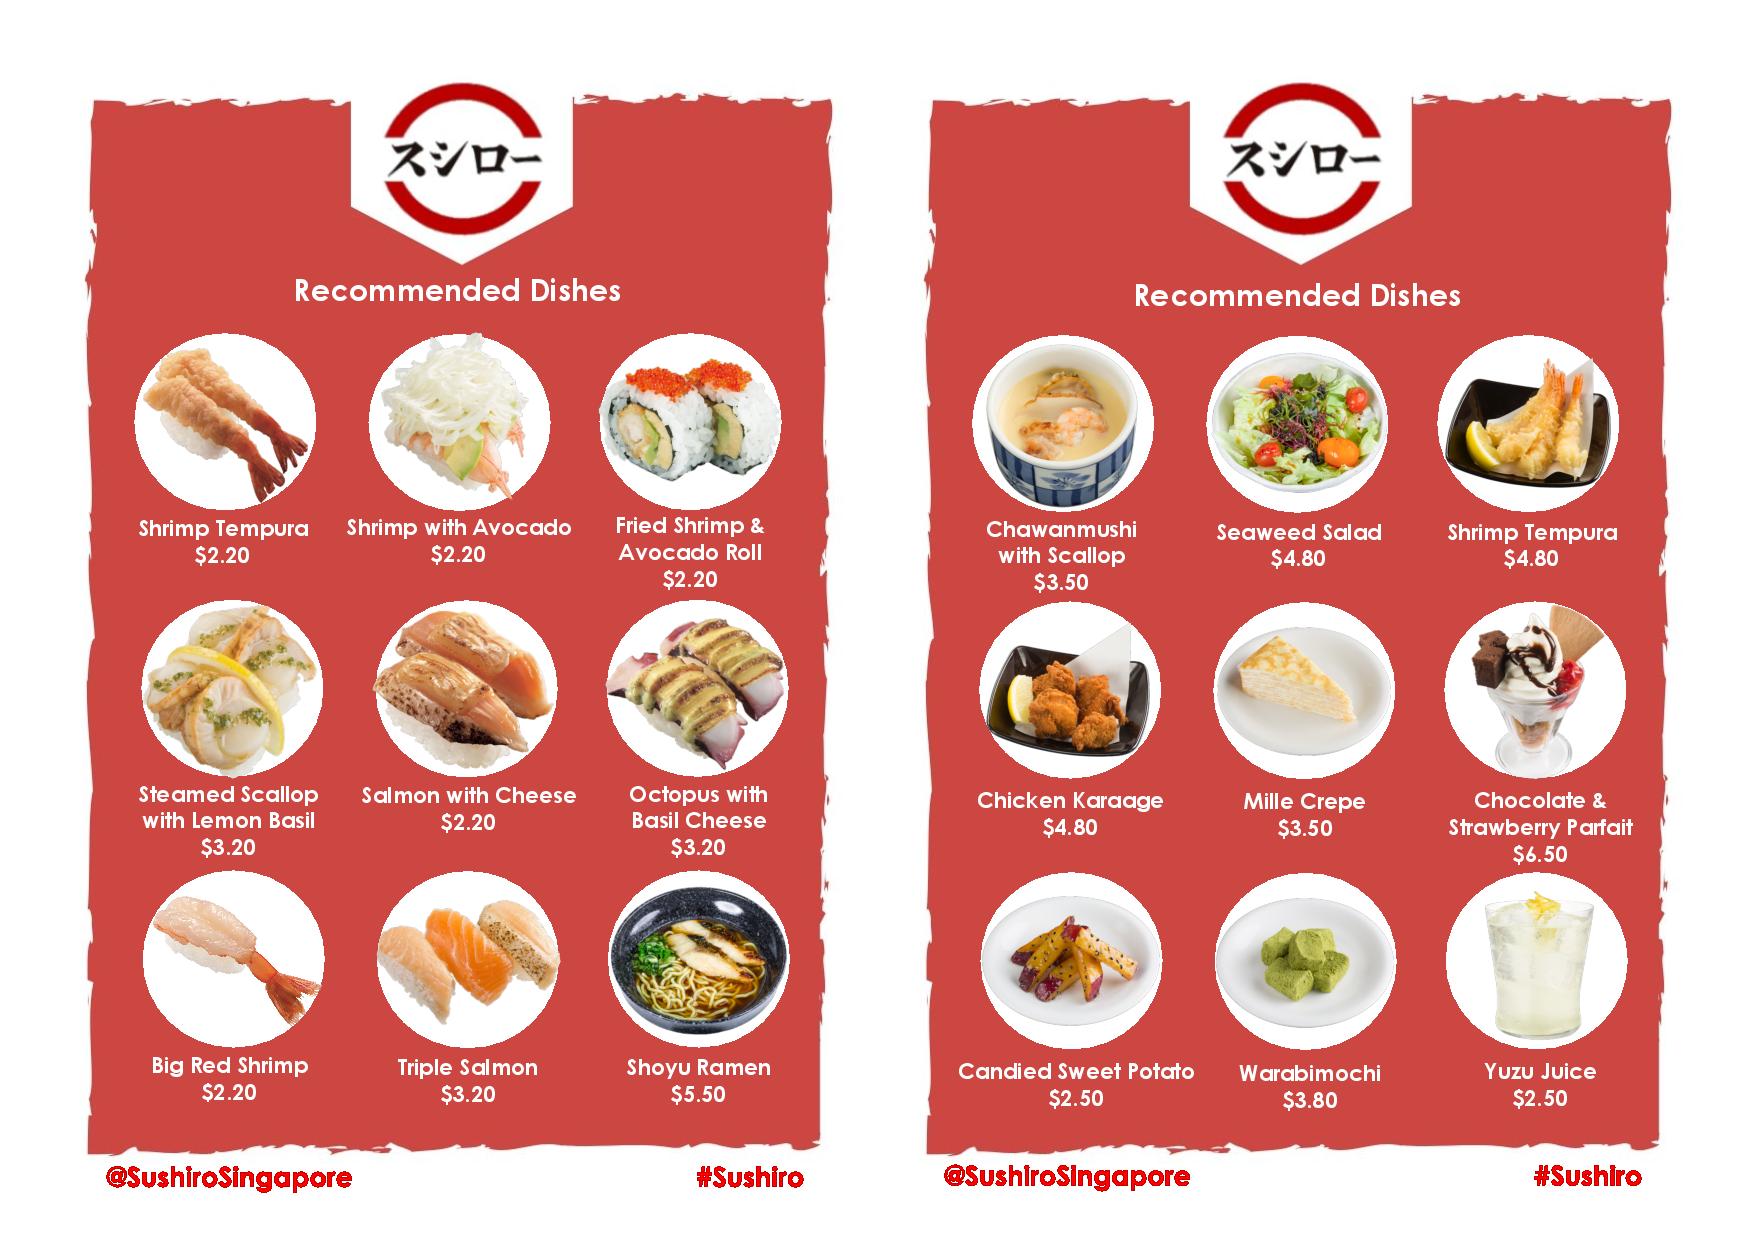 Japan’s number 1 kaiten sushi chain, Sushiro, is opening in Singapore on 19 Aug, offers S$2.20 Fatty Tuna sushi & $4.80 Sea Urchin sushi - 2